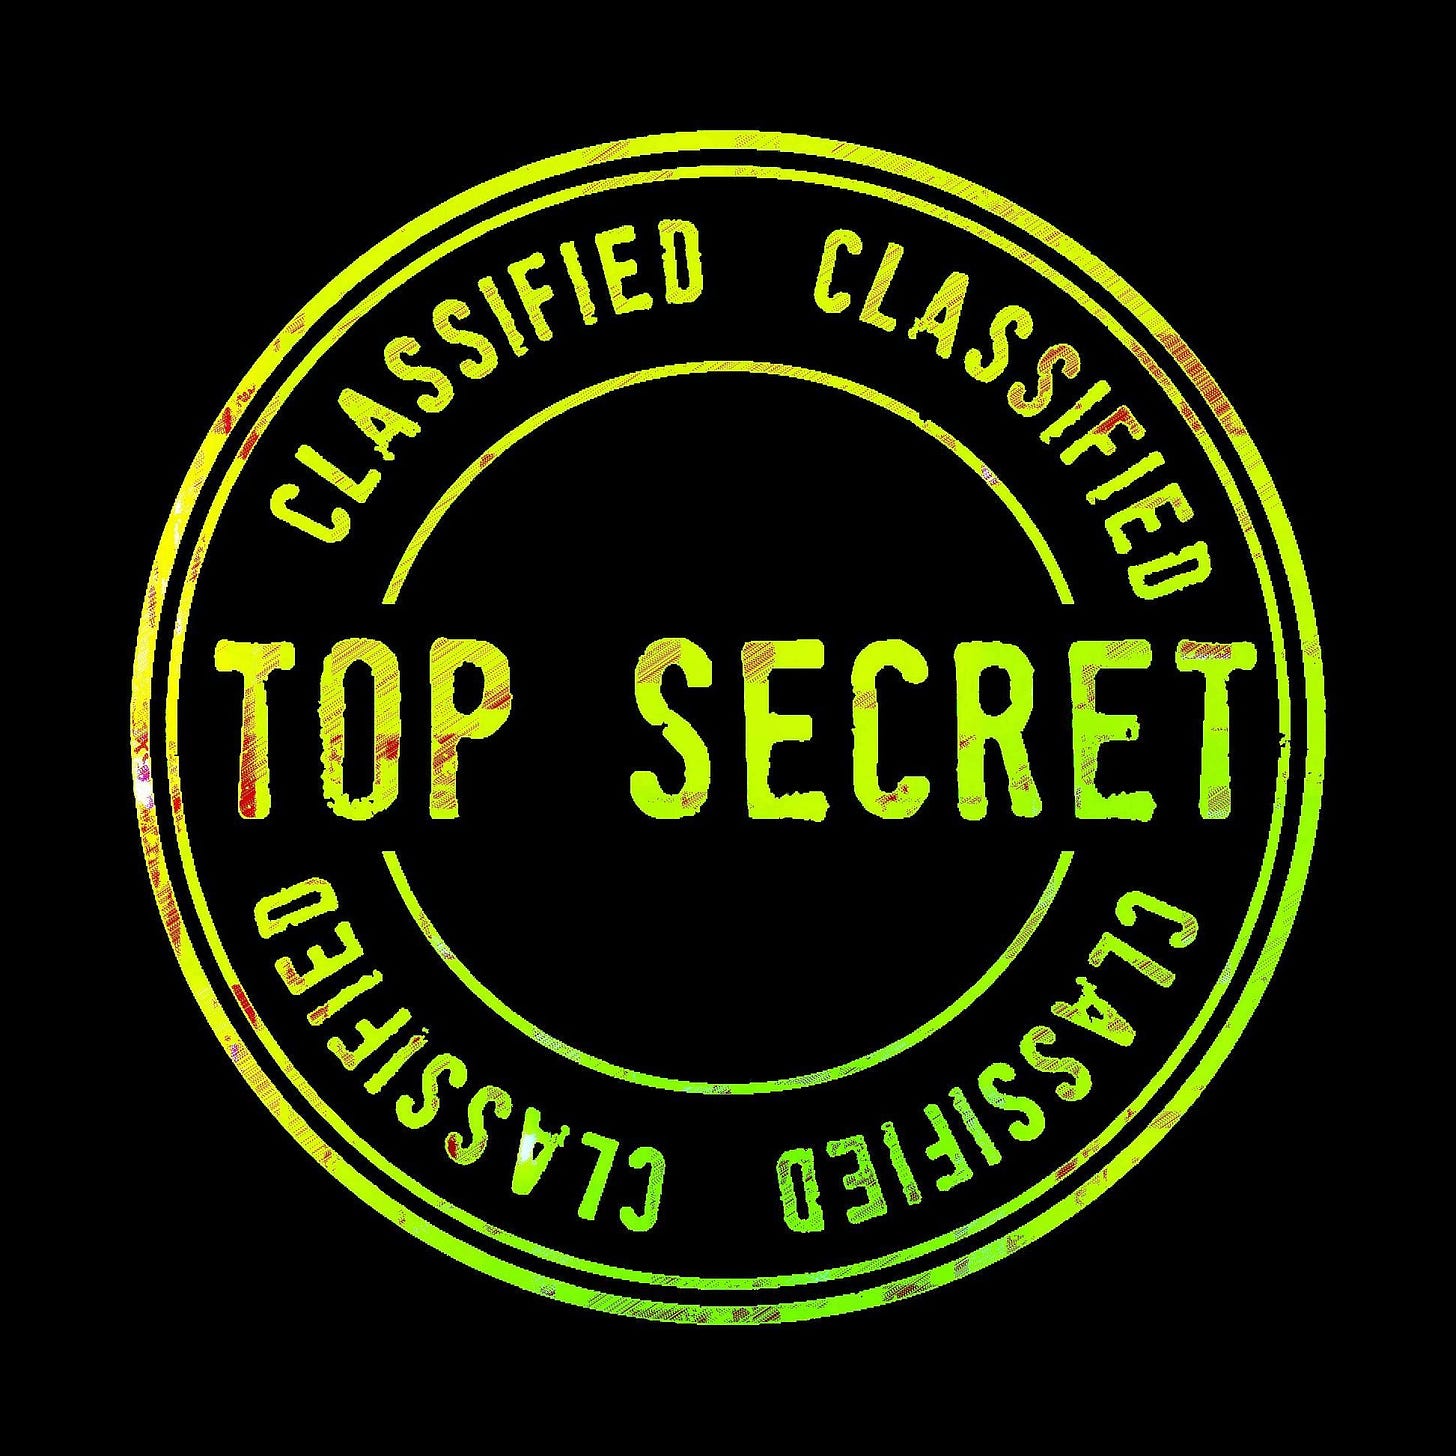 Free picture: top secret, sign, classified document, llustration, secret